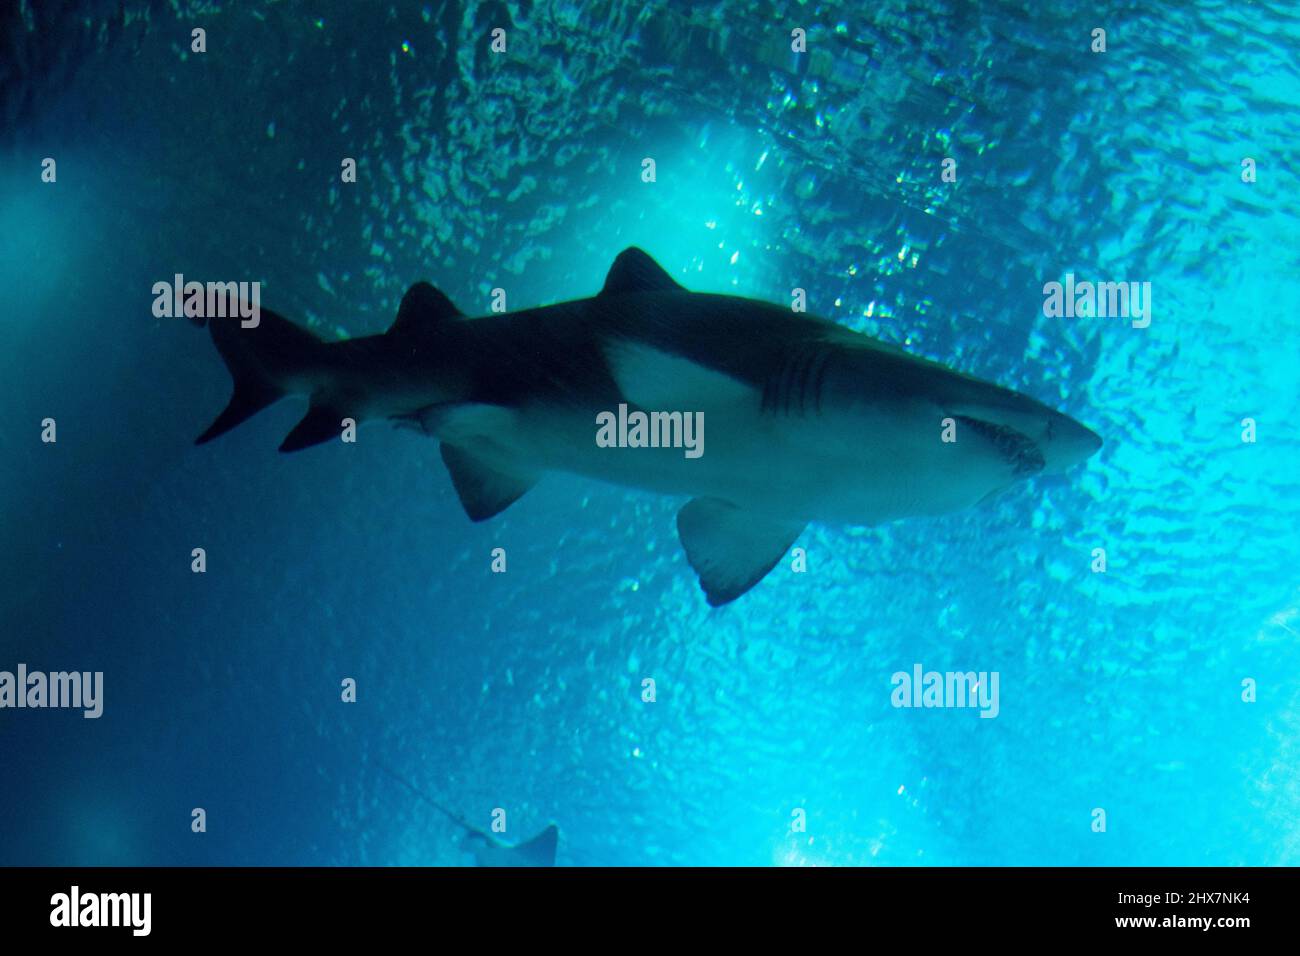 Bull shark cruising the blue water of the ocean. Big shark swimming. Shark view from bottom, shark belly. Stock Photo